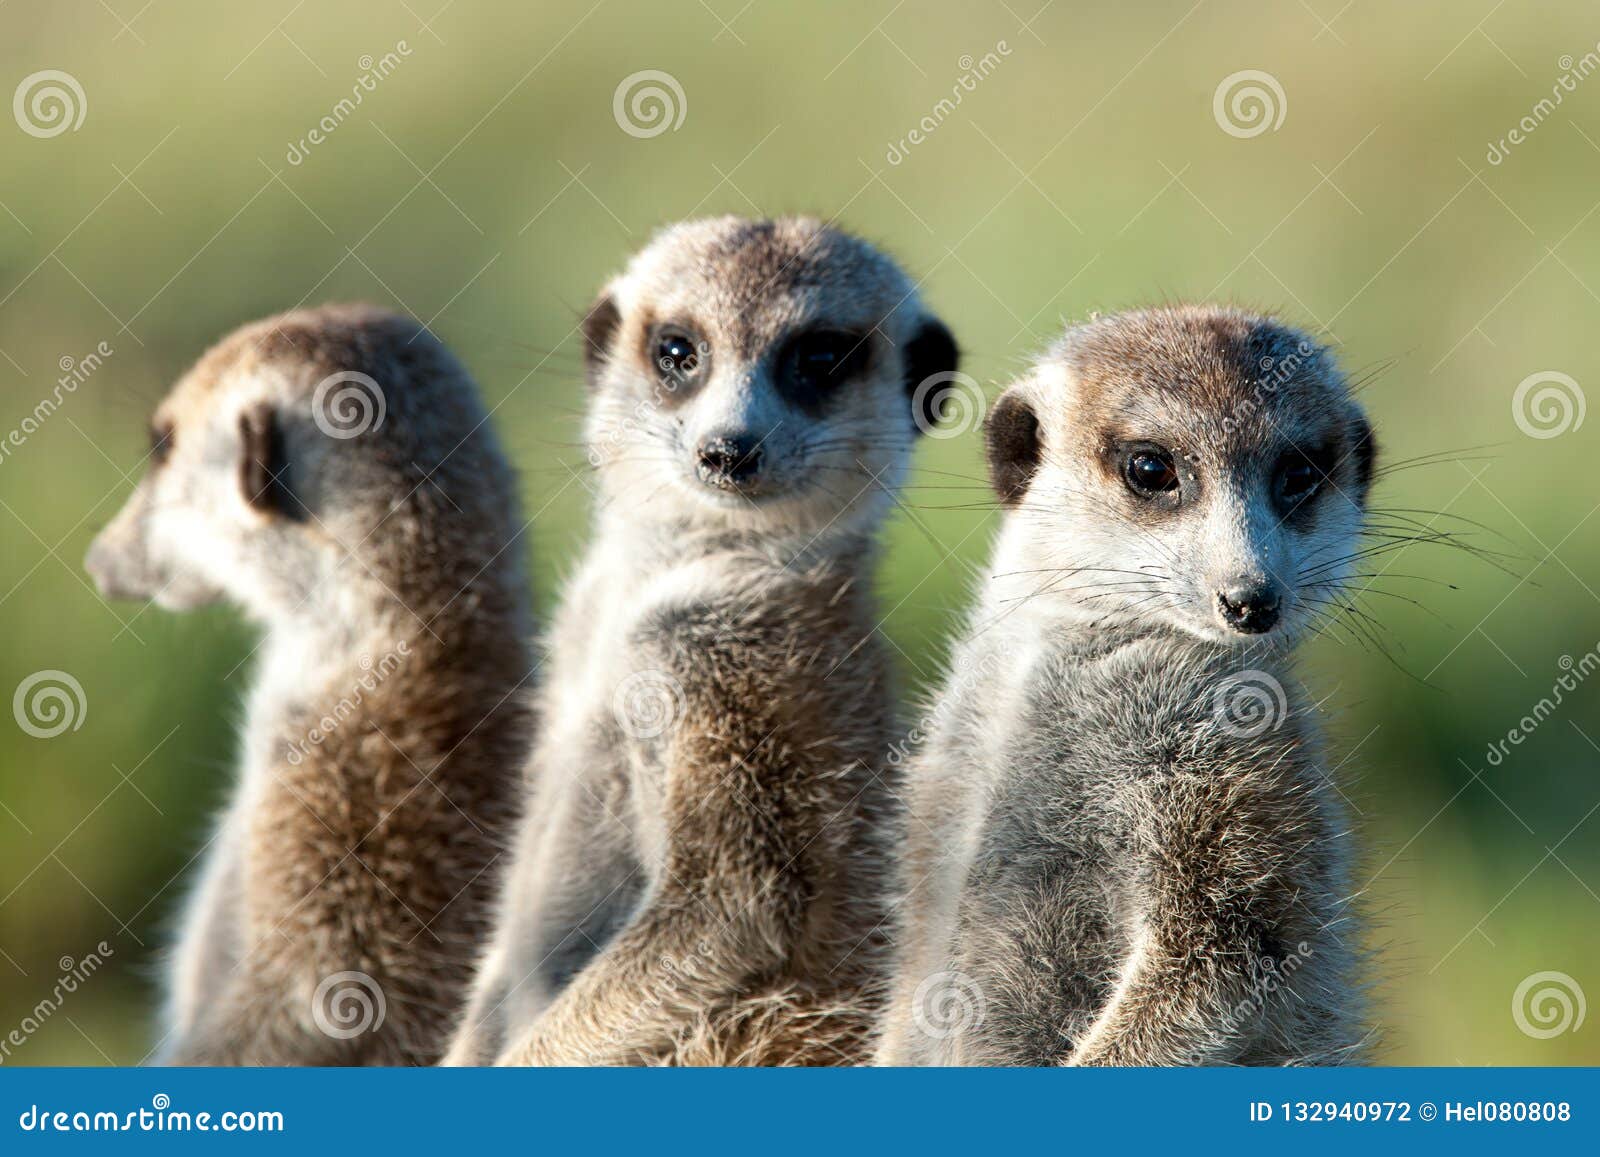 meerkats in africa, three cute meerkats guarding in natural habitat, botswana, africa